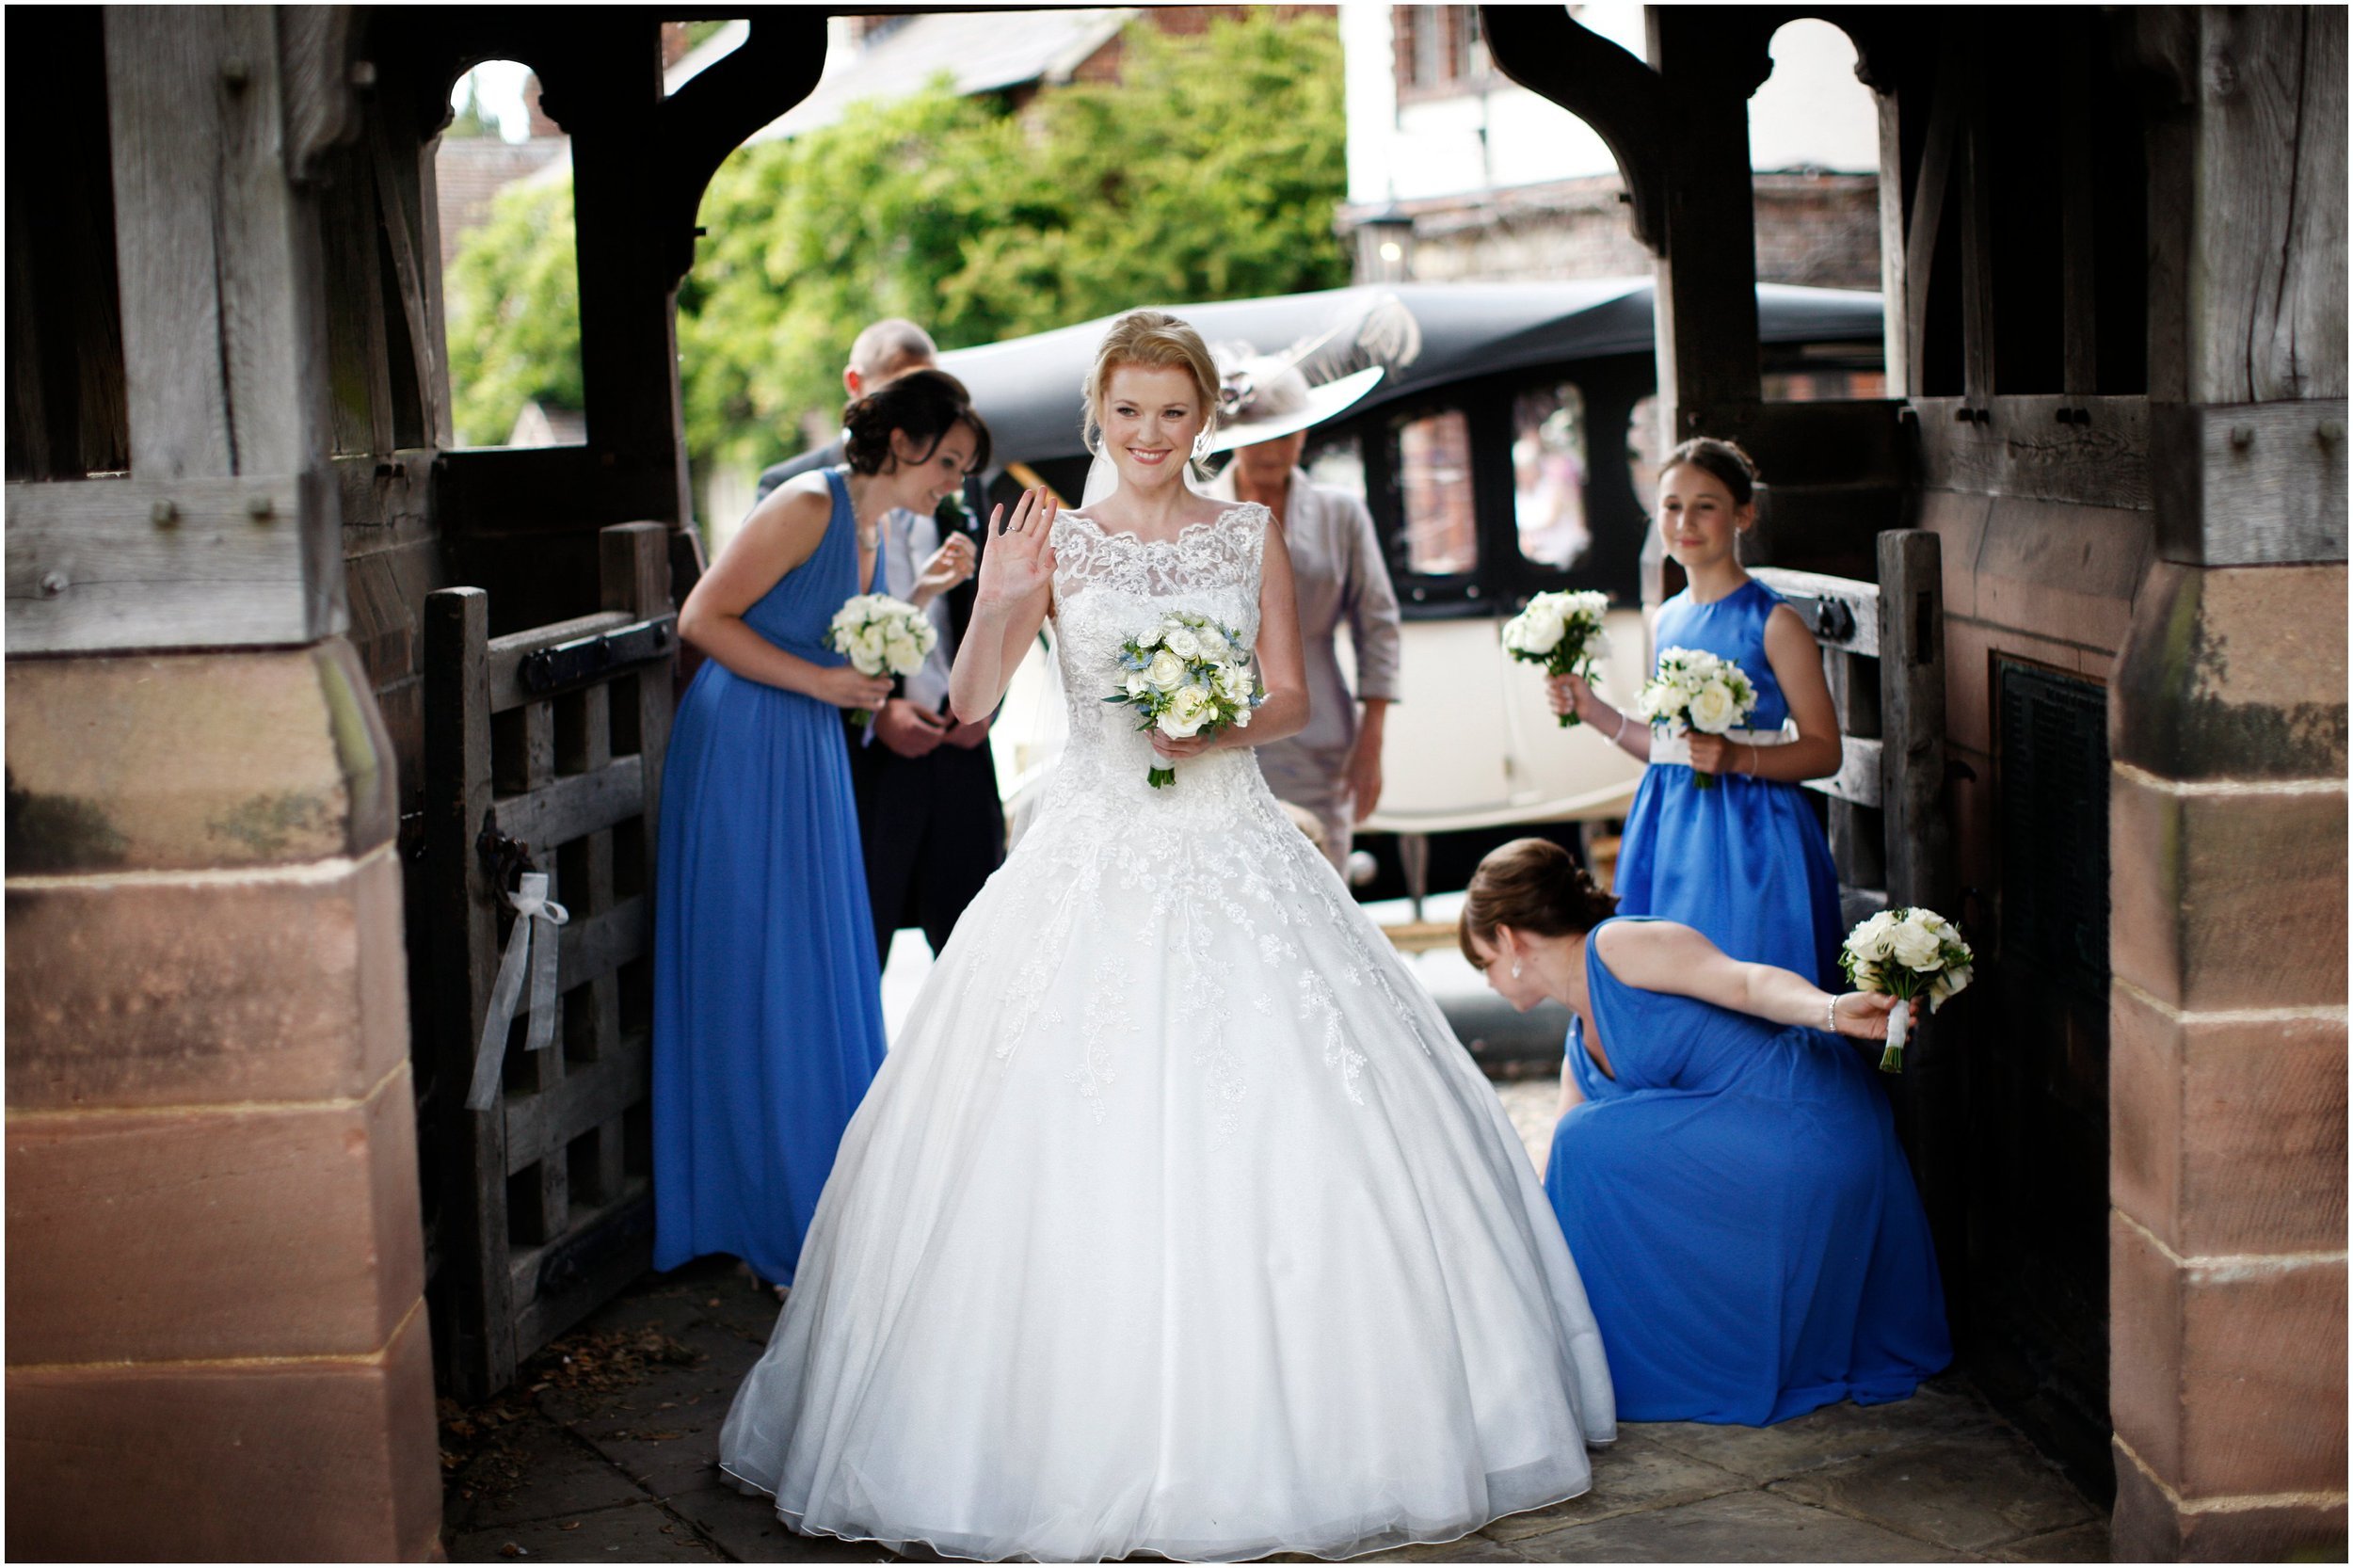 Arley-Hall-weding-photographer-wedding-photography-brett-harkness-cheshire-wedding-photographer006_.jpg